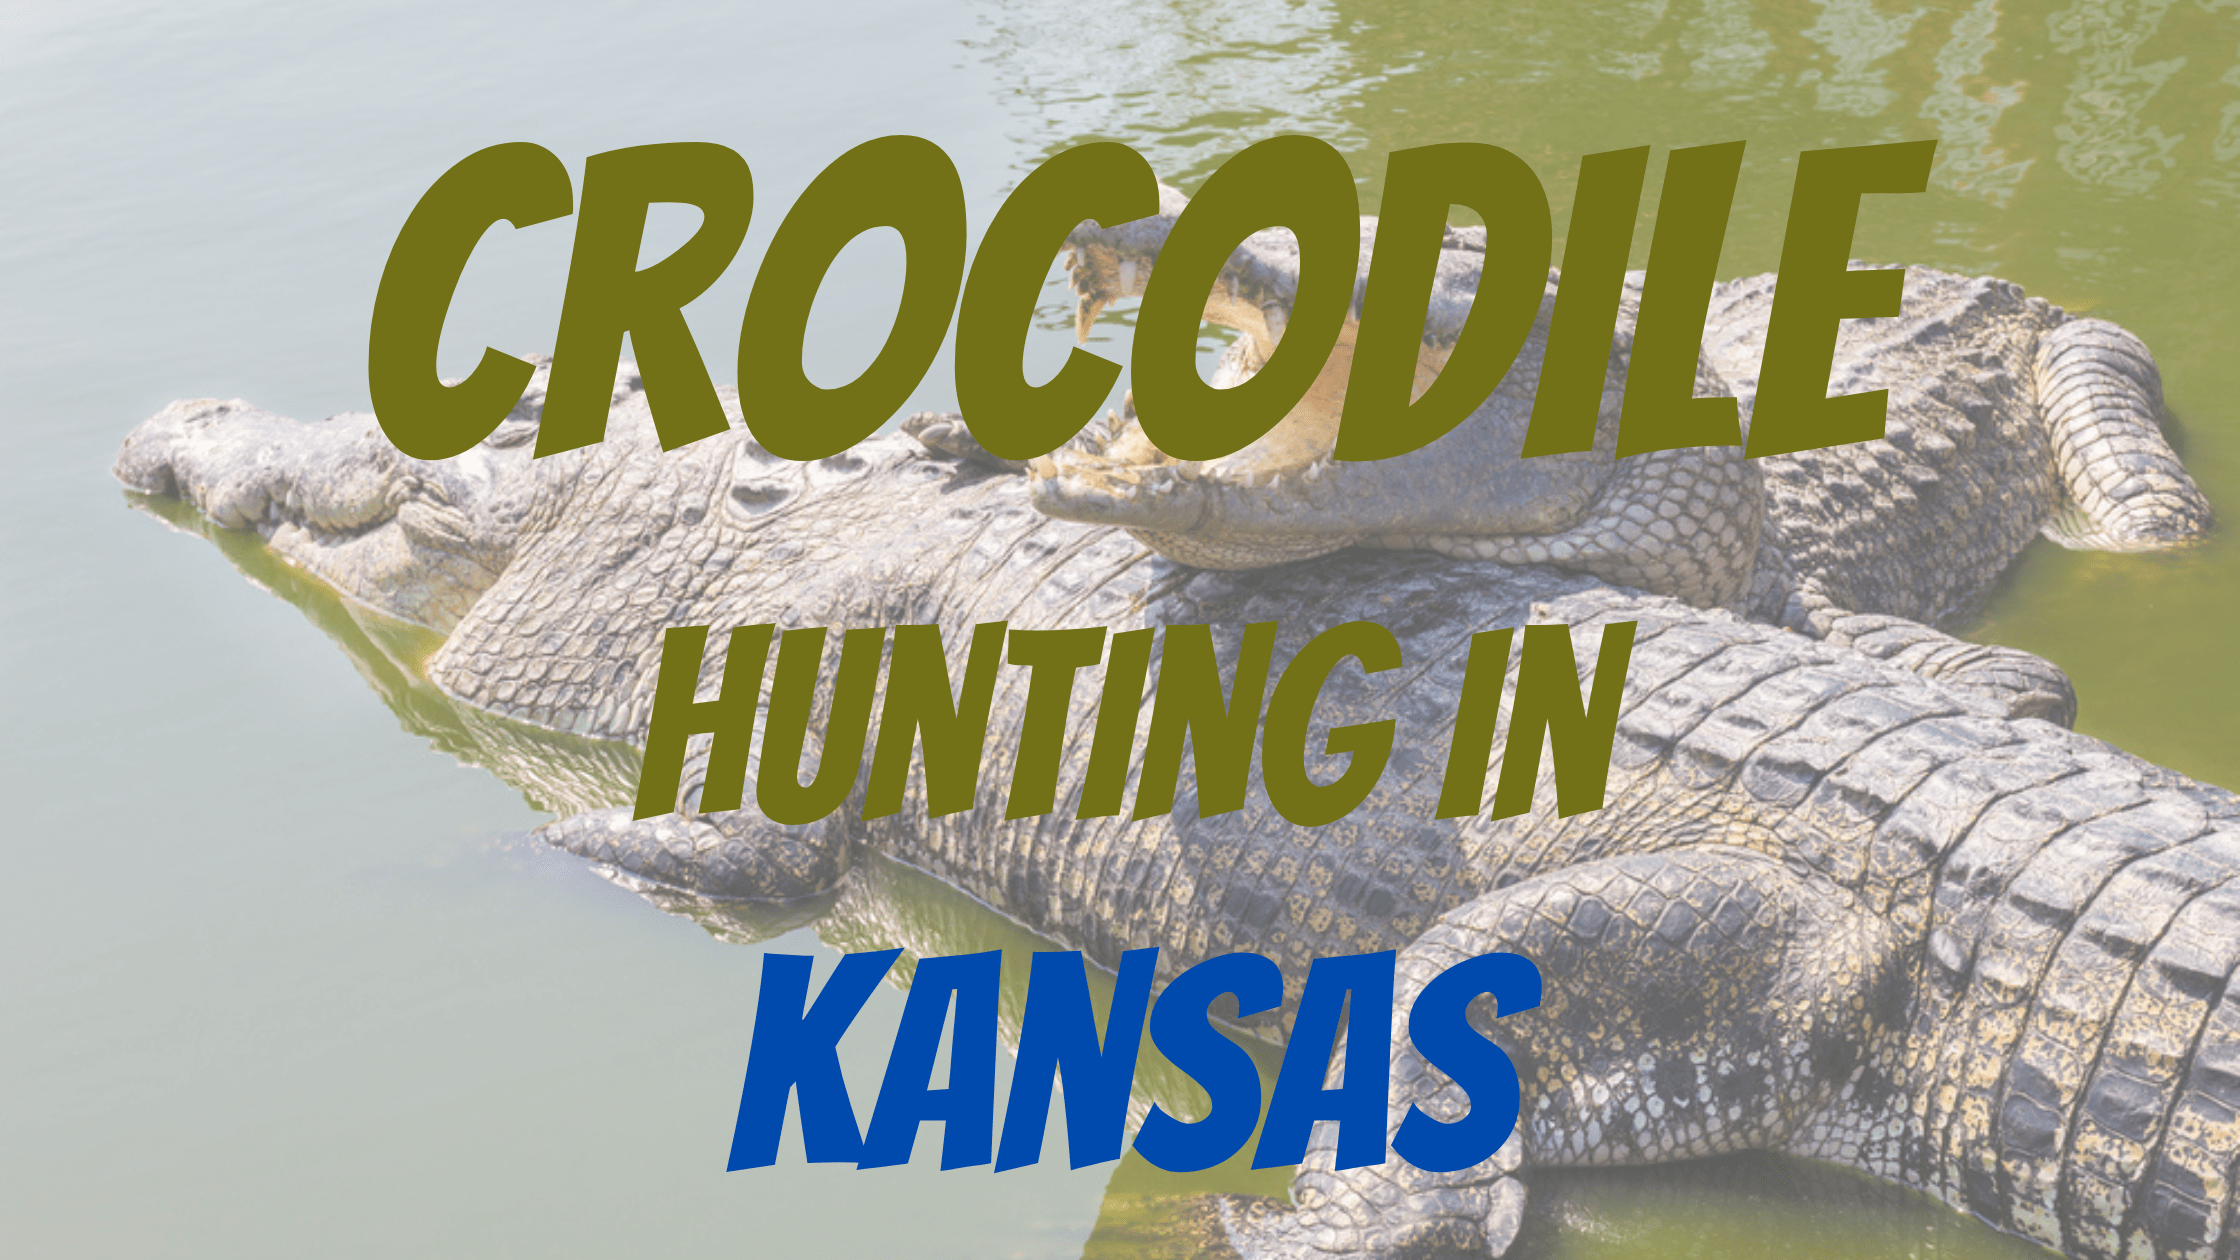 Crocodile Hunting in Kansas